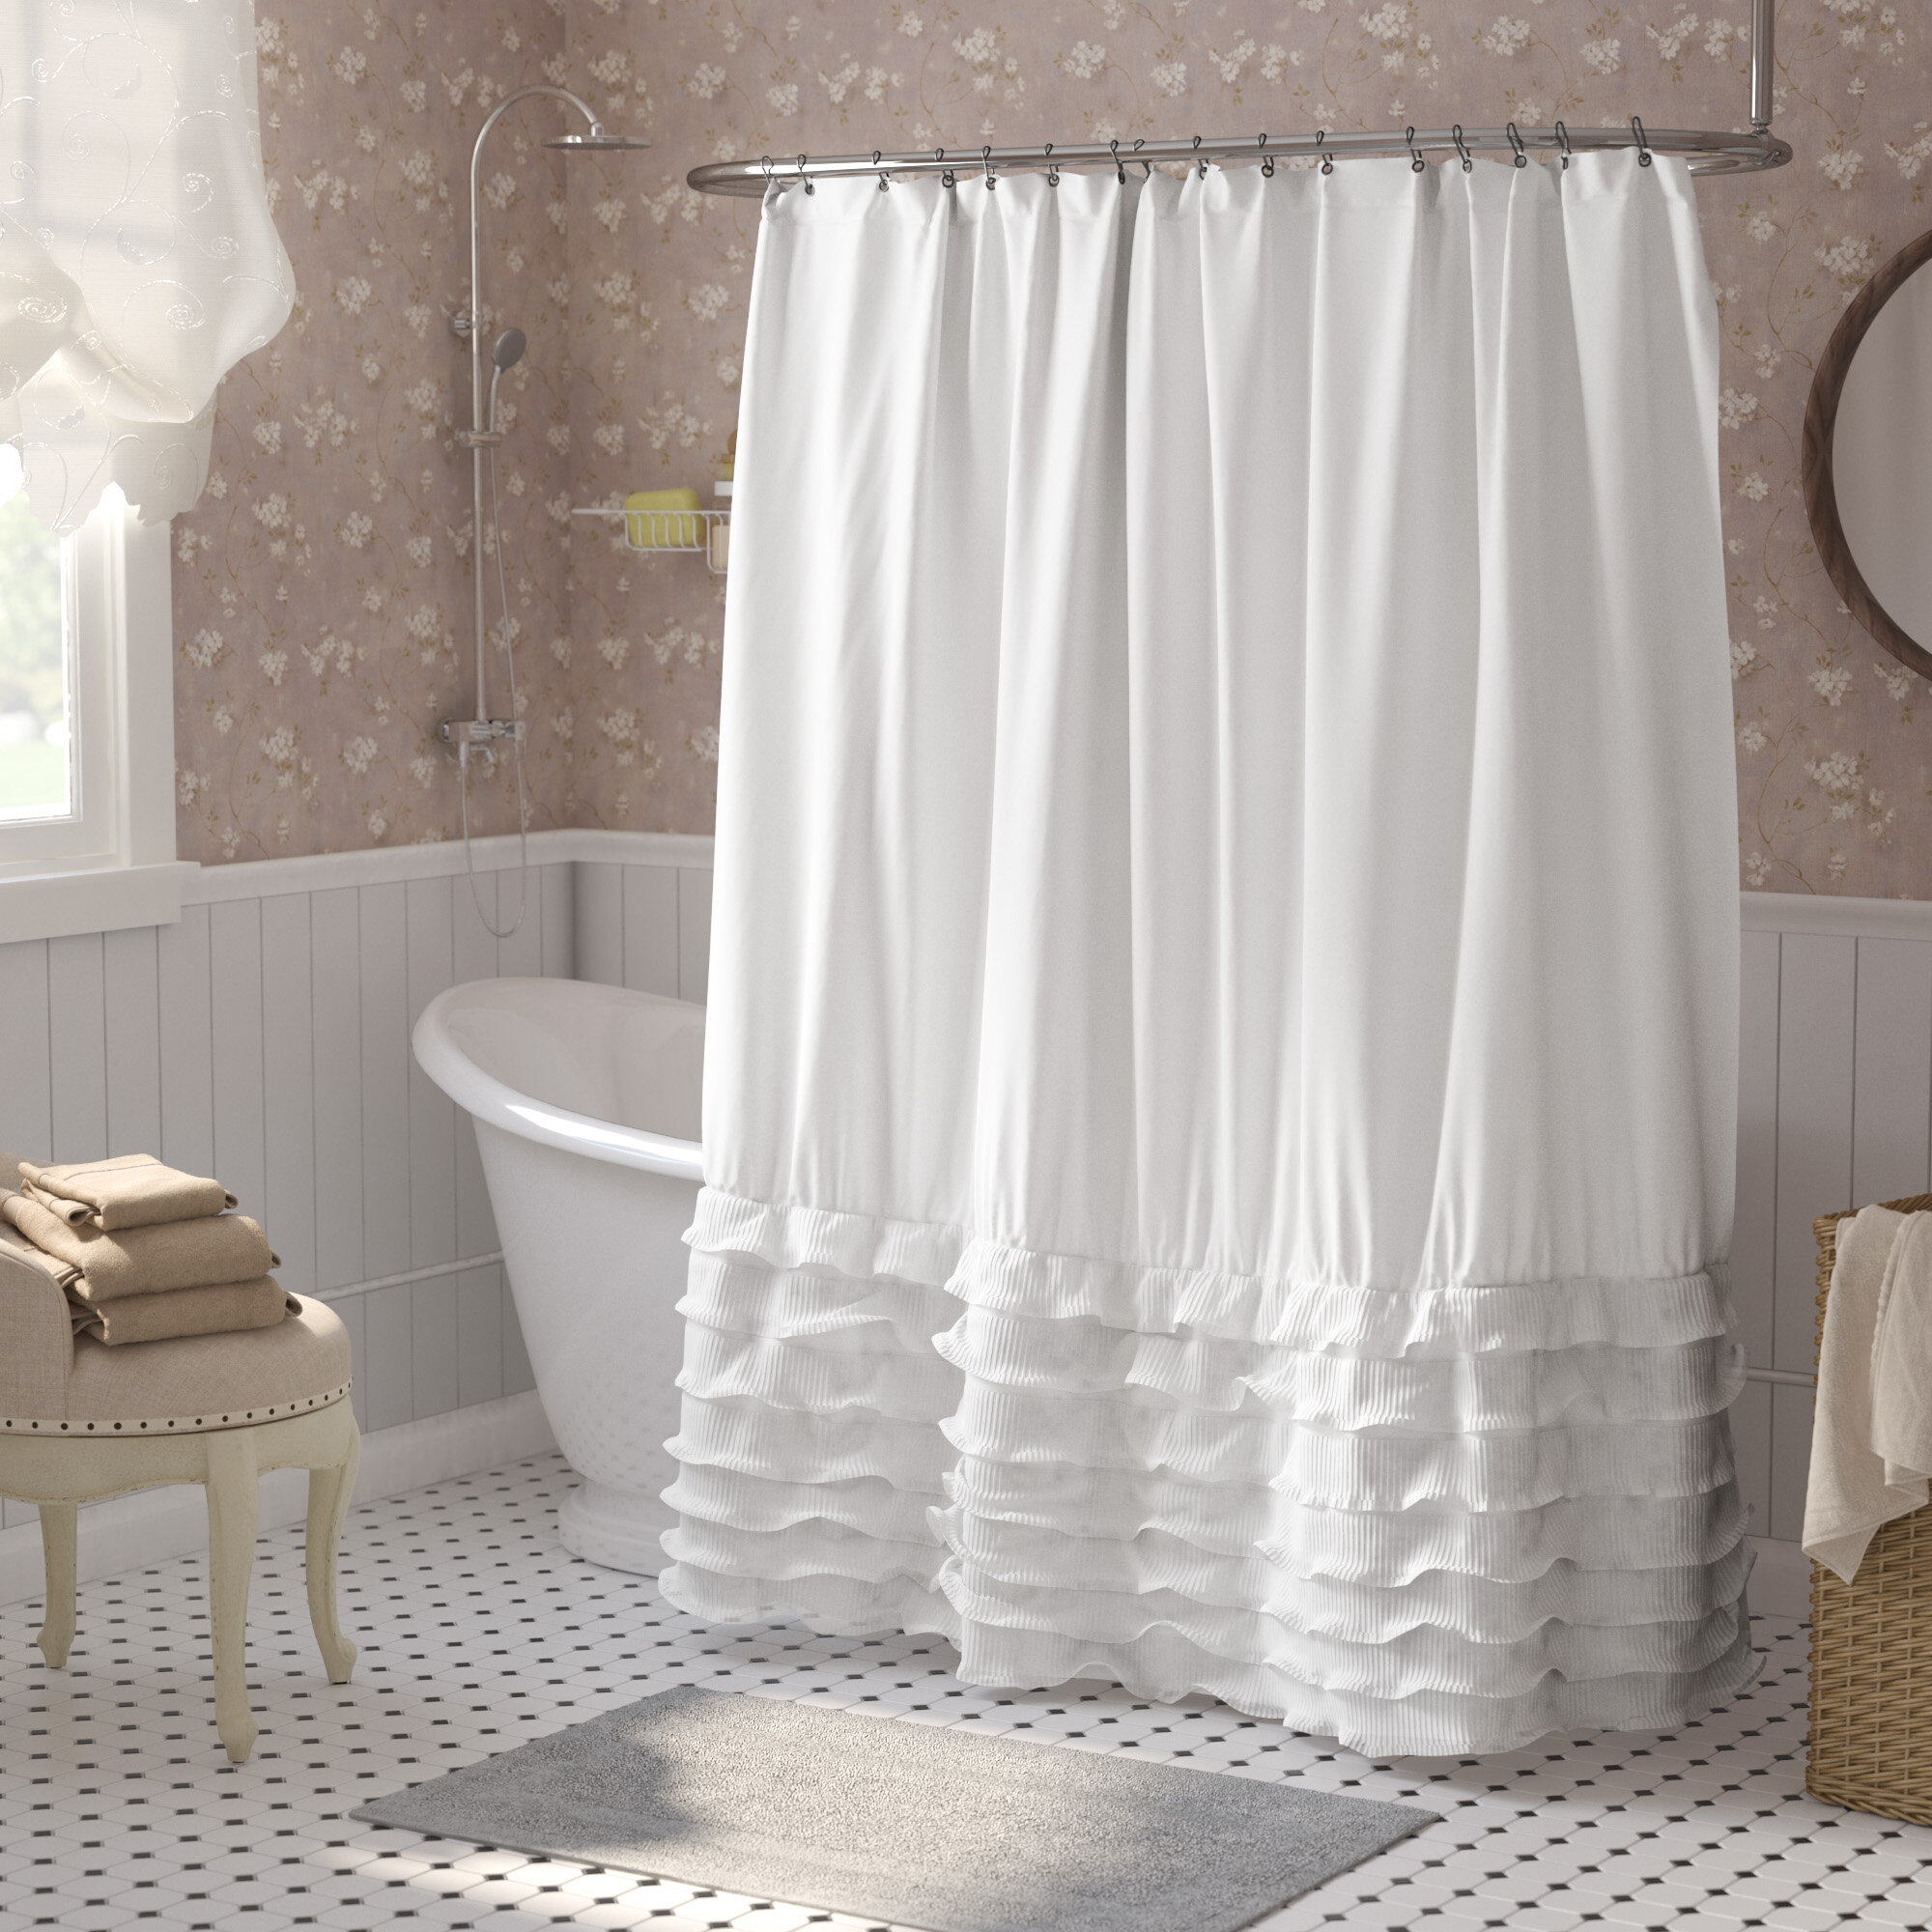 Clawfoot Tub Shower Curtain Visualhunt, Best Shower Curtain Liner For Clawfoot Tub